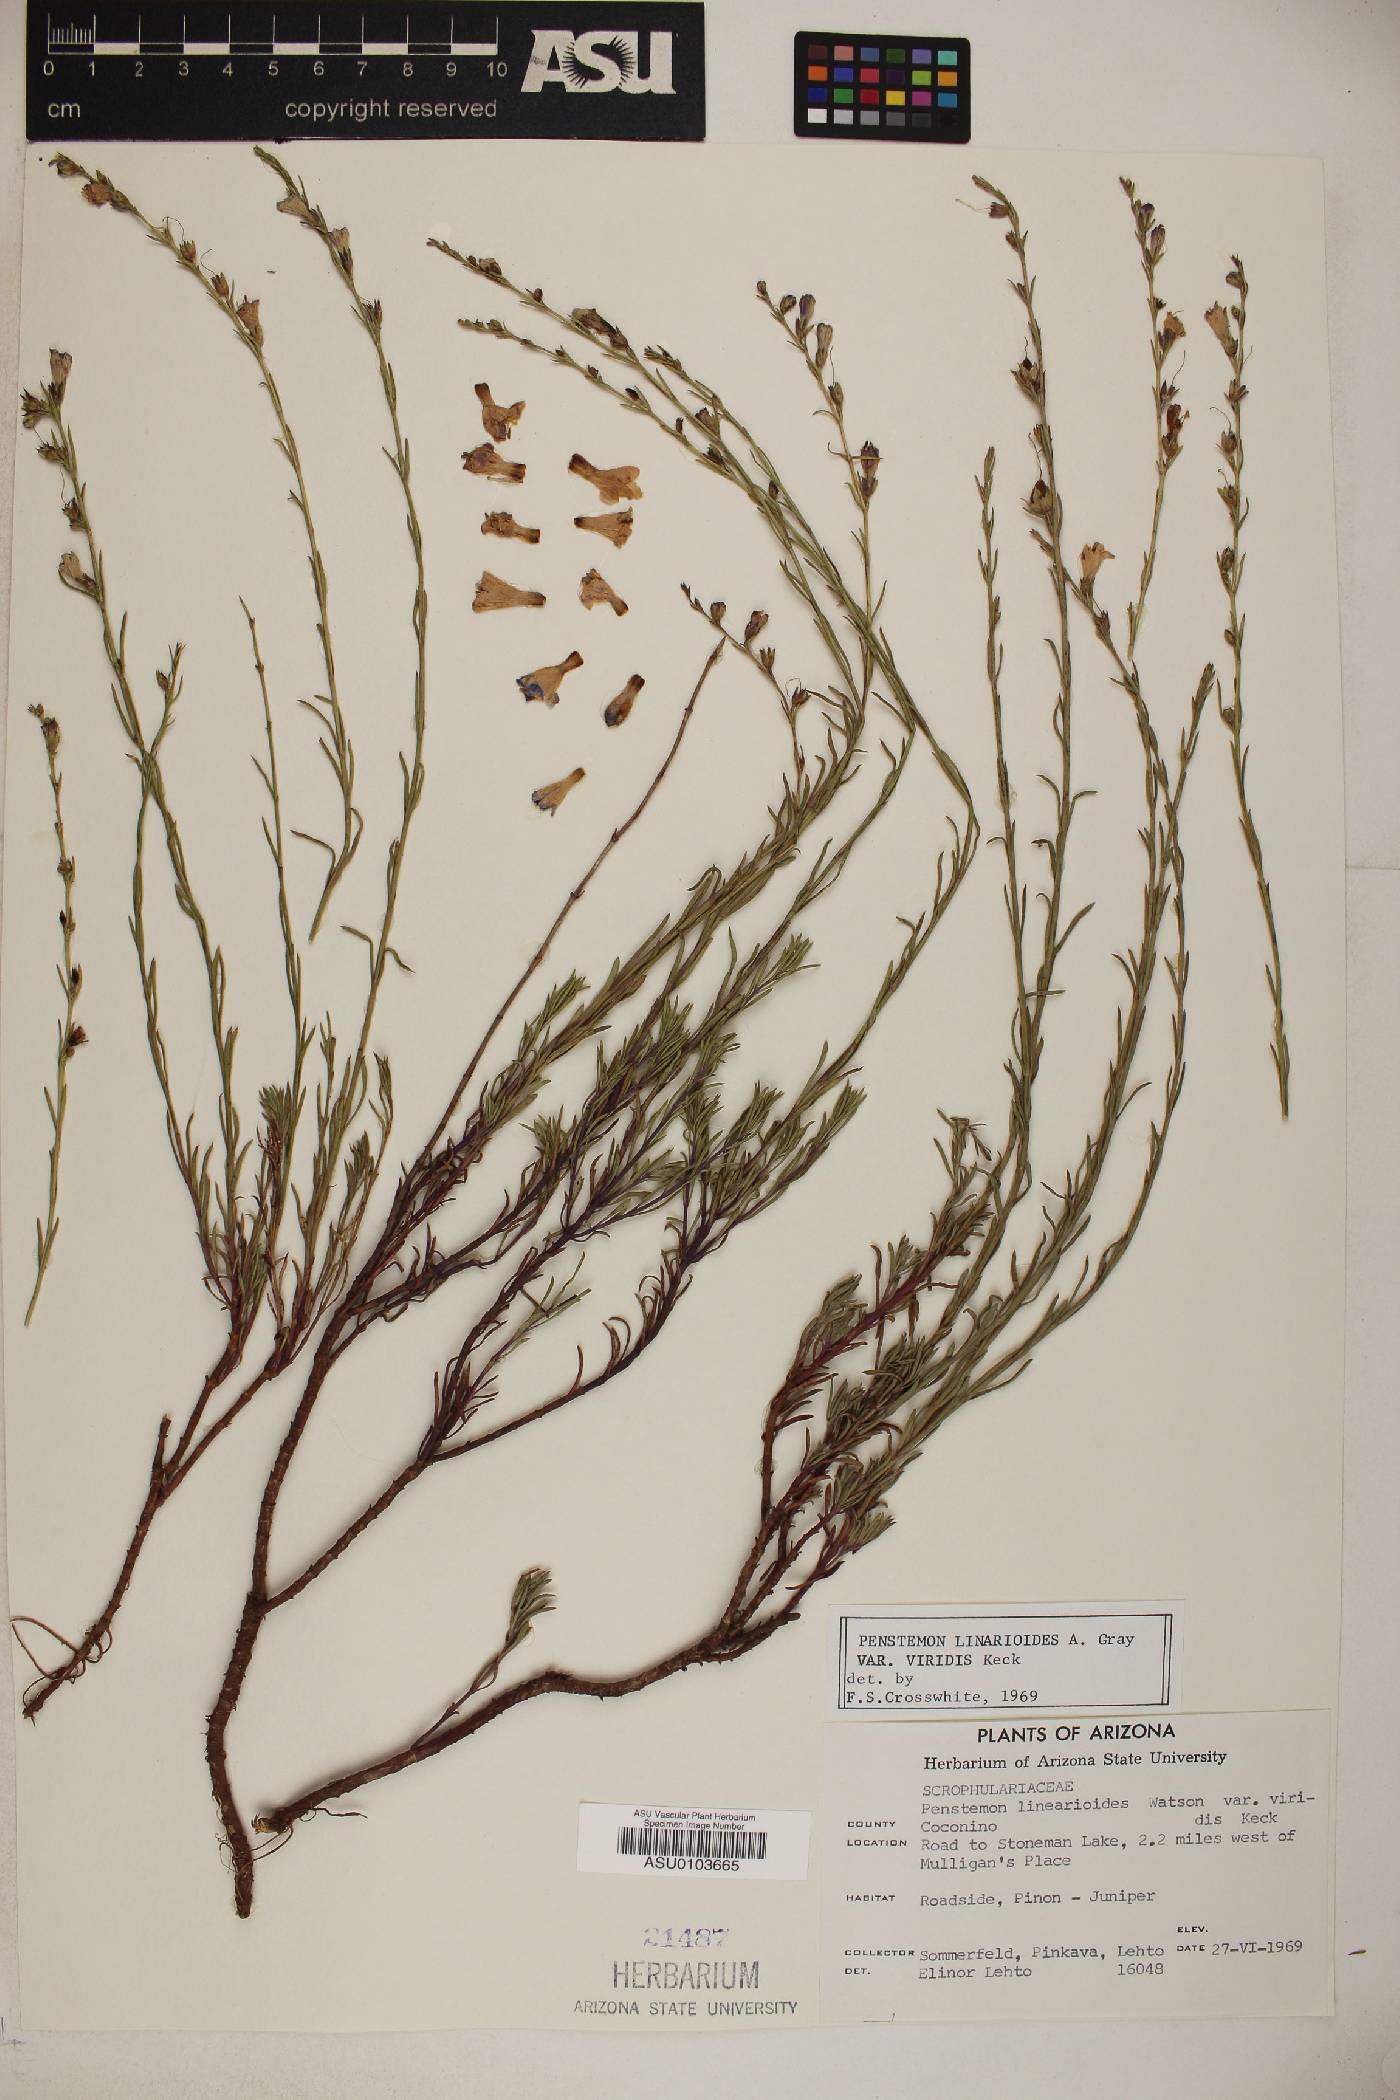 Penstemon linarioides ssp. sileri image